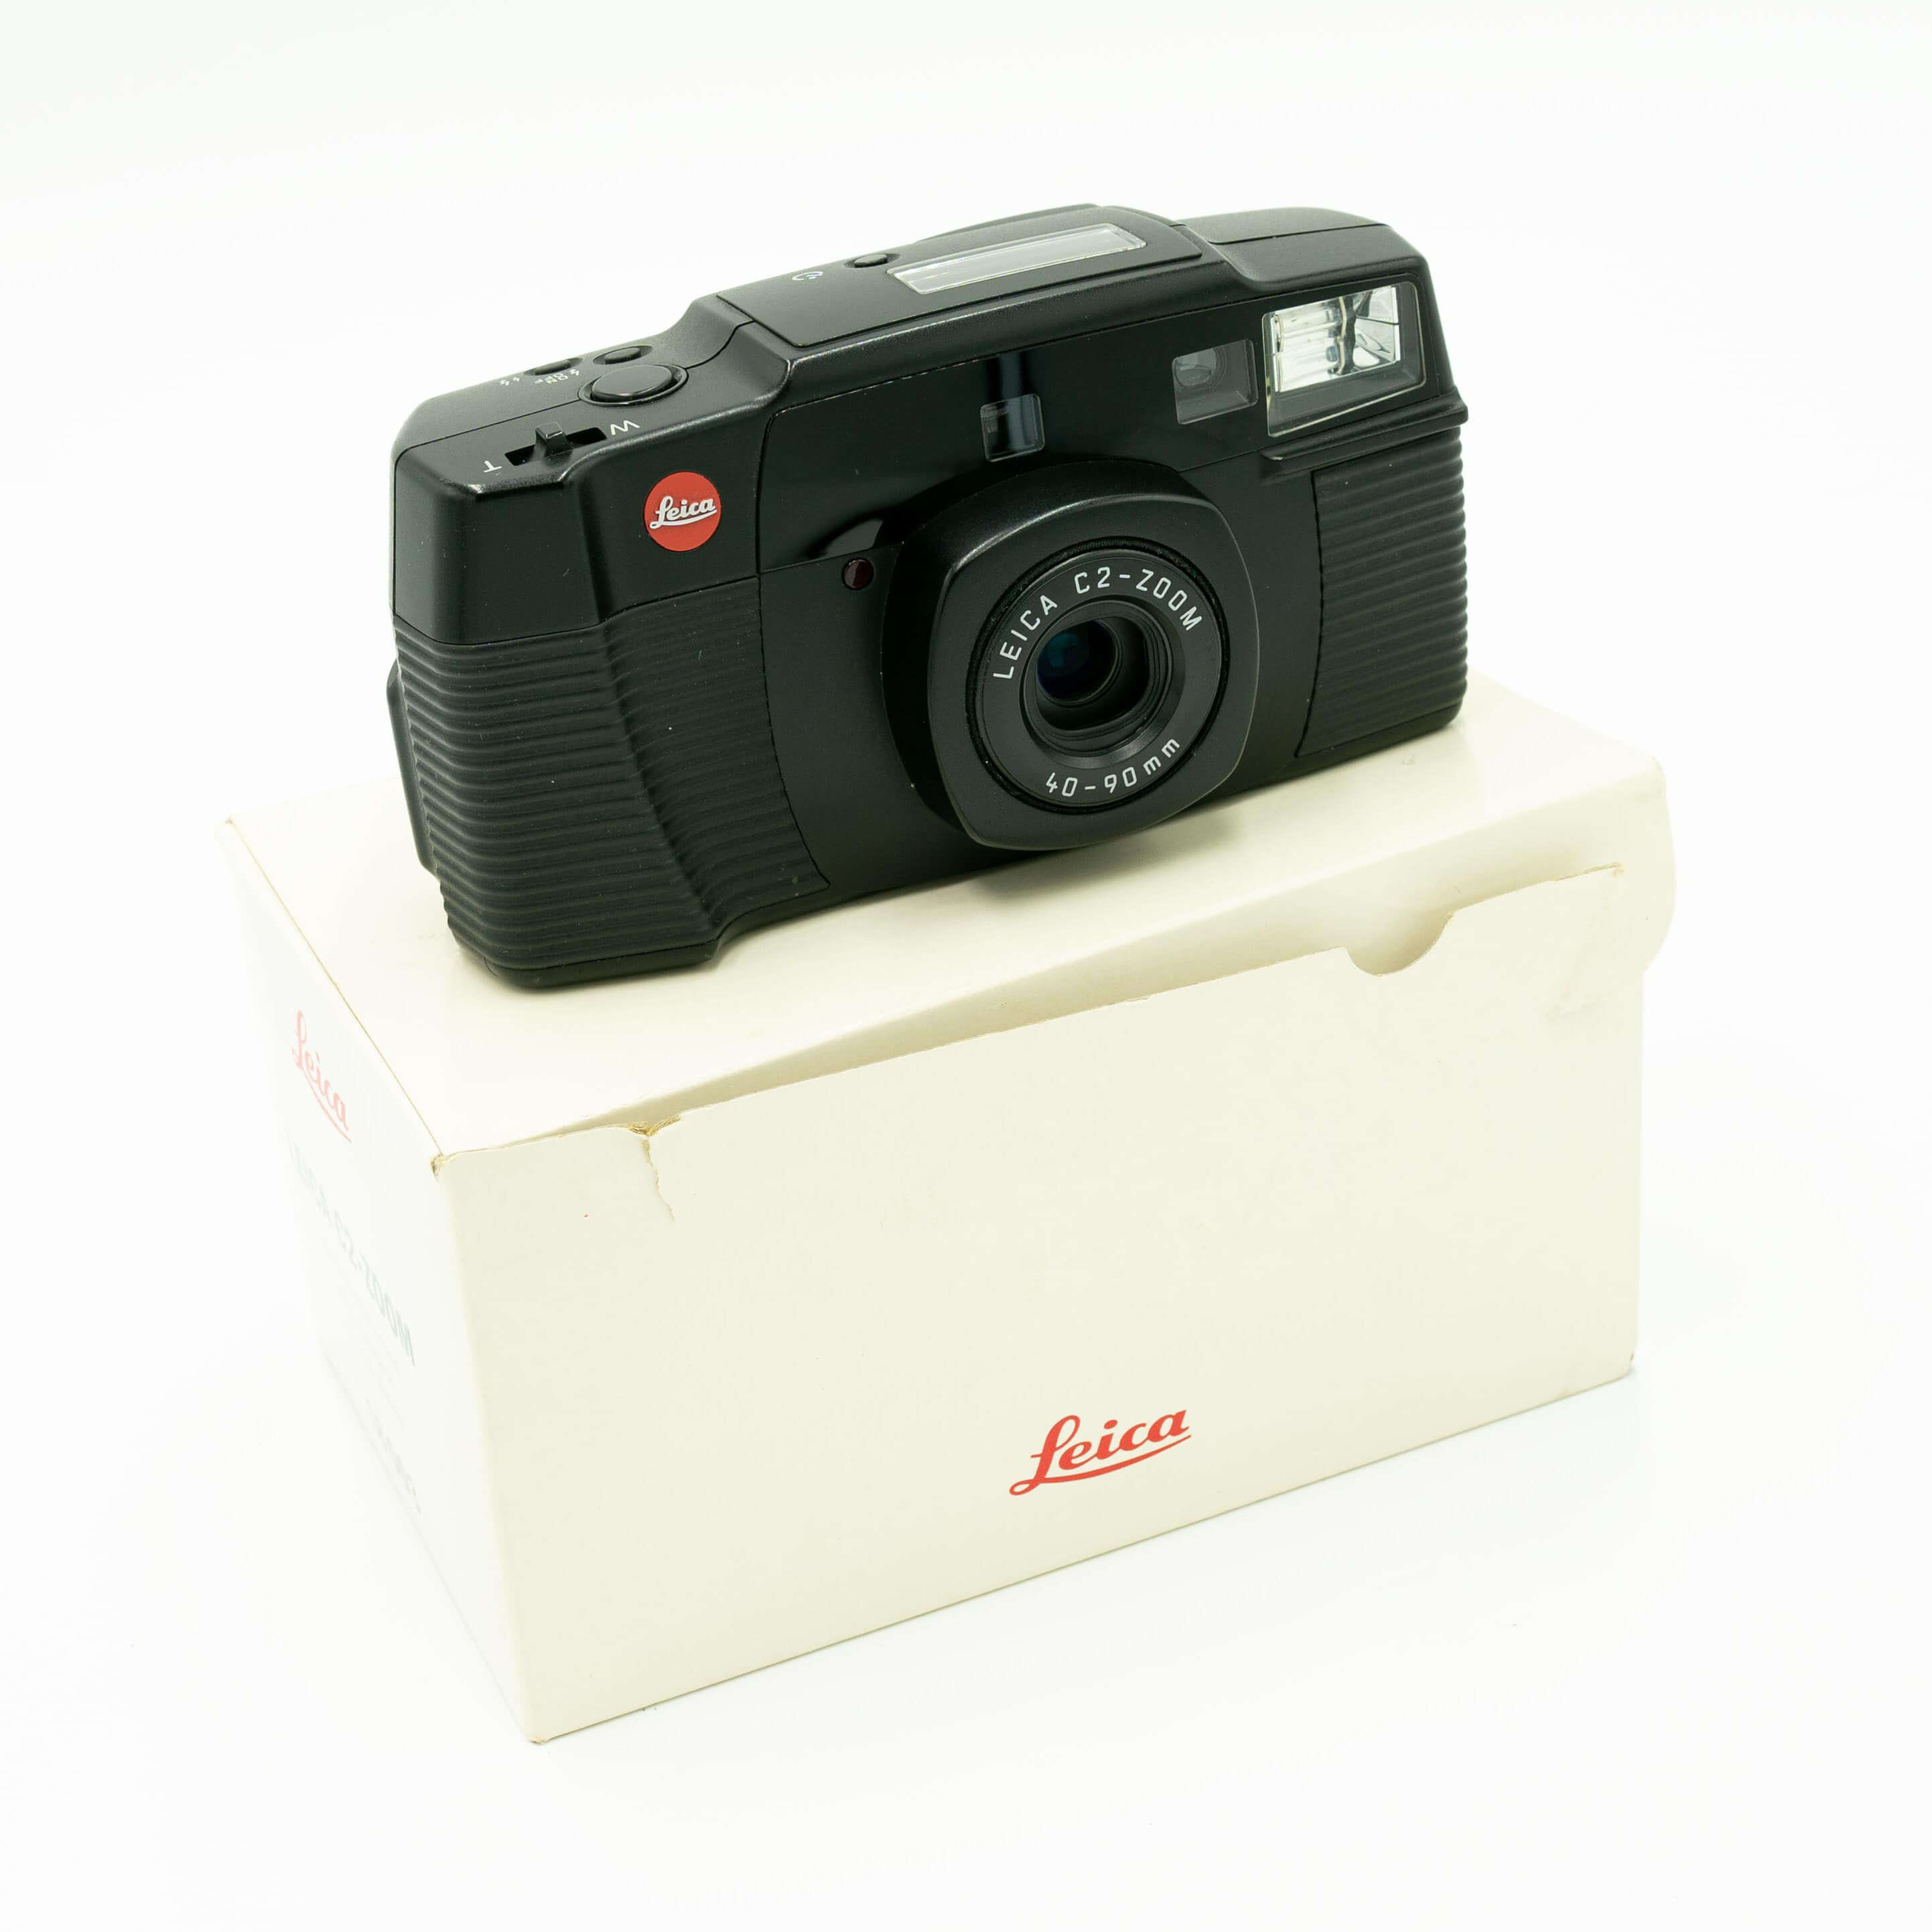 Leica C2 Zoom – Australian Analog